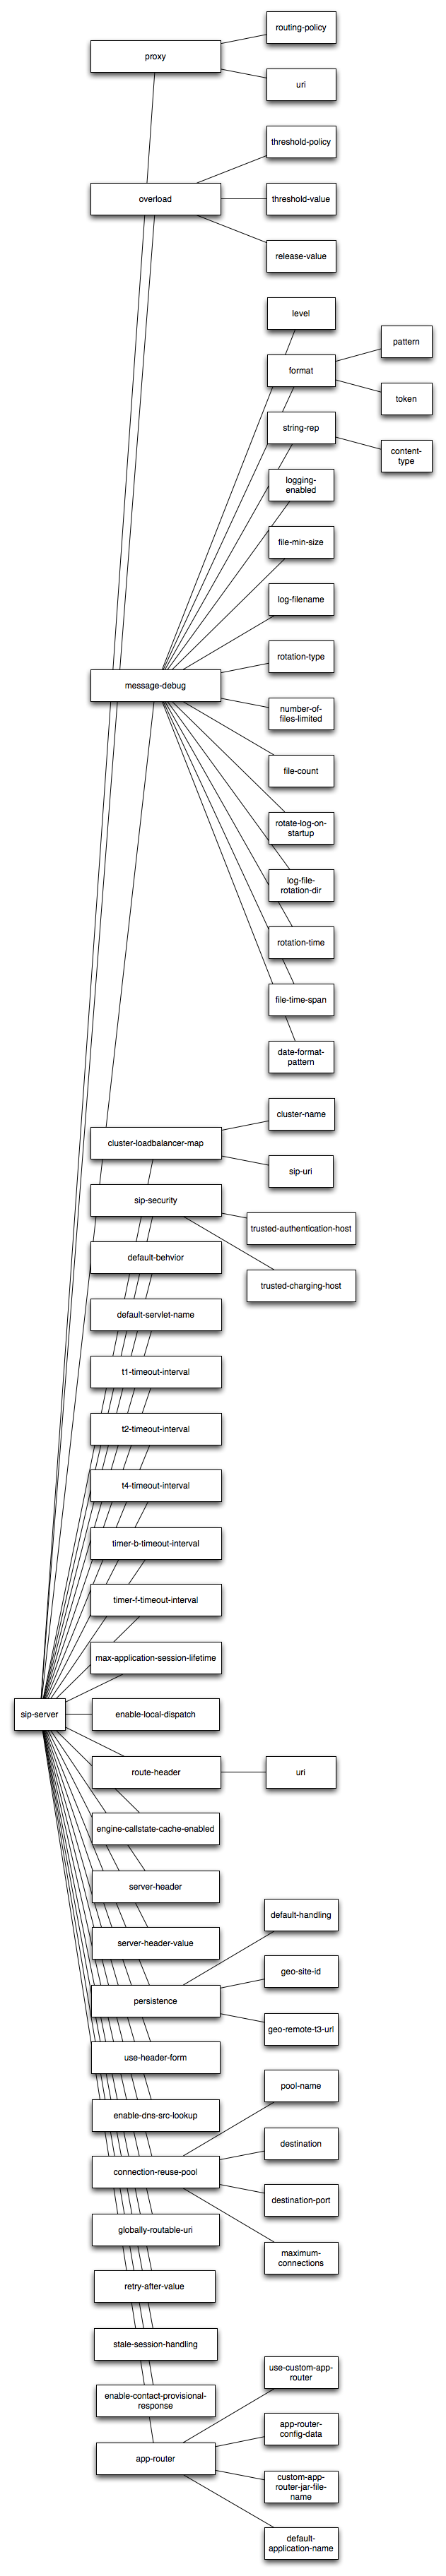 Element Hierarchy of sipserver.xml